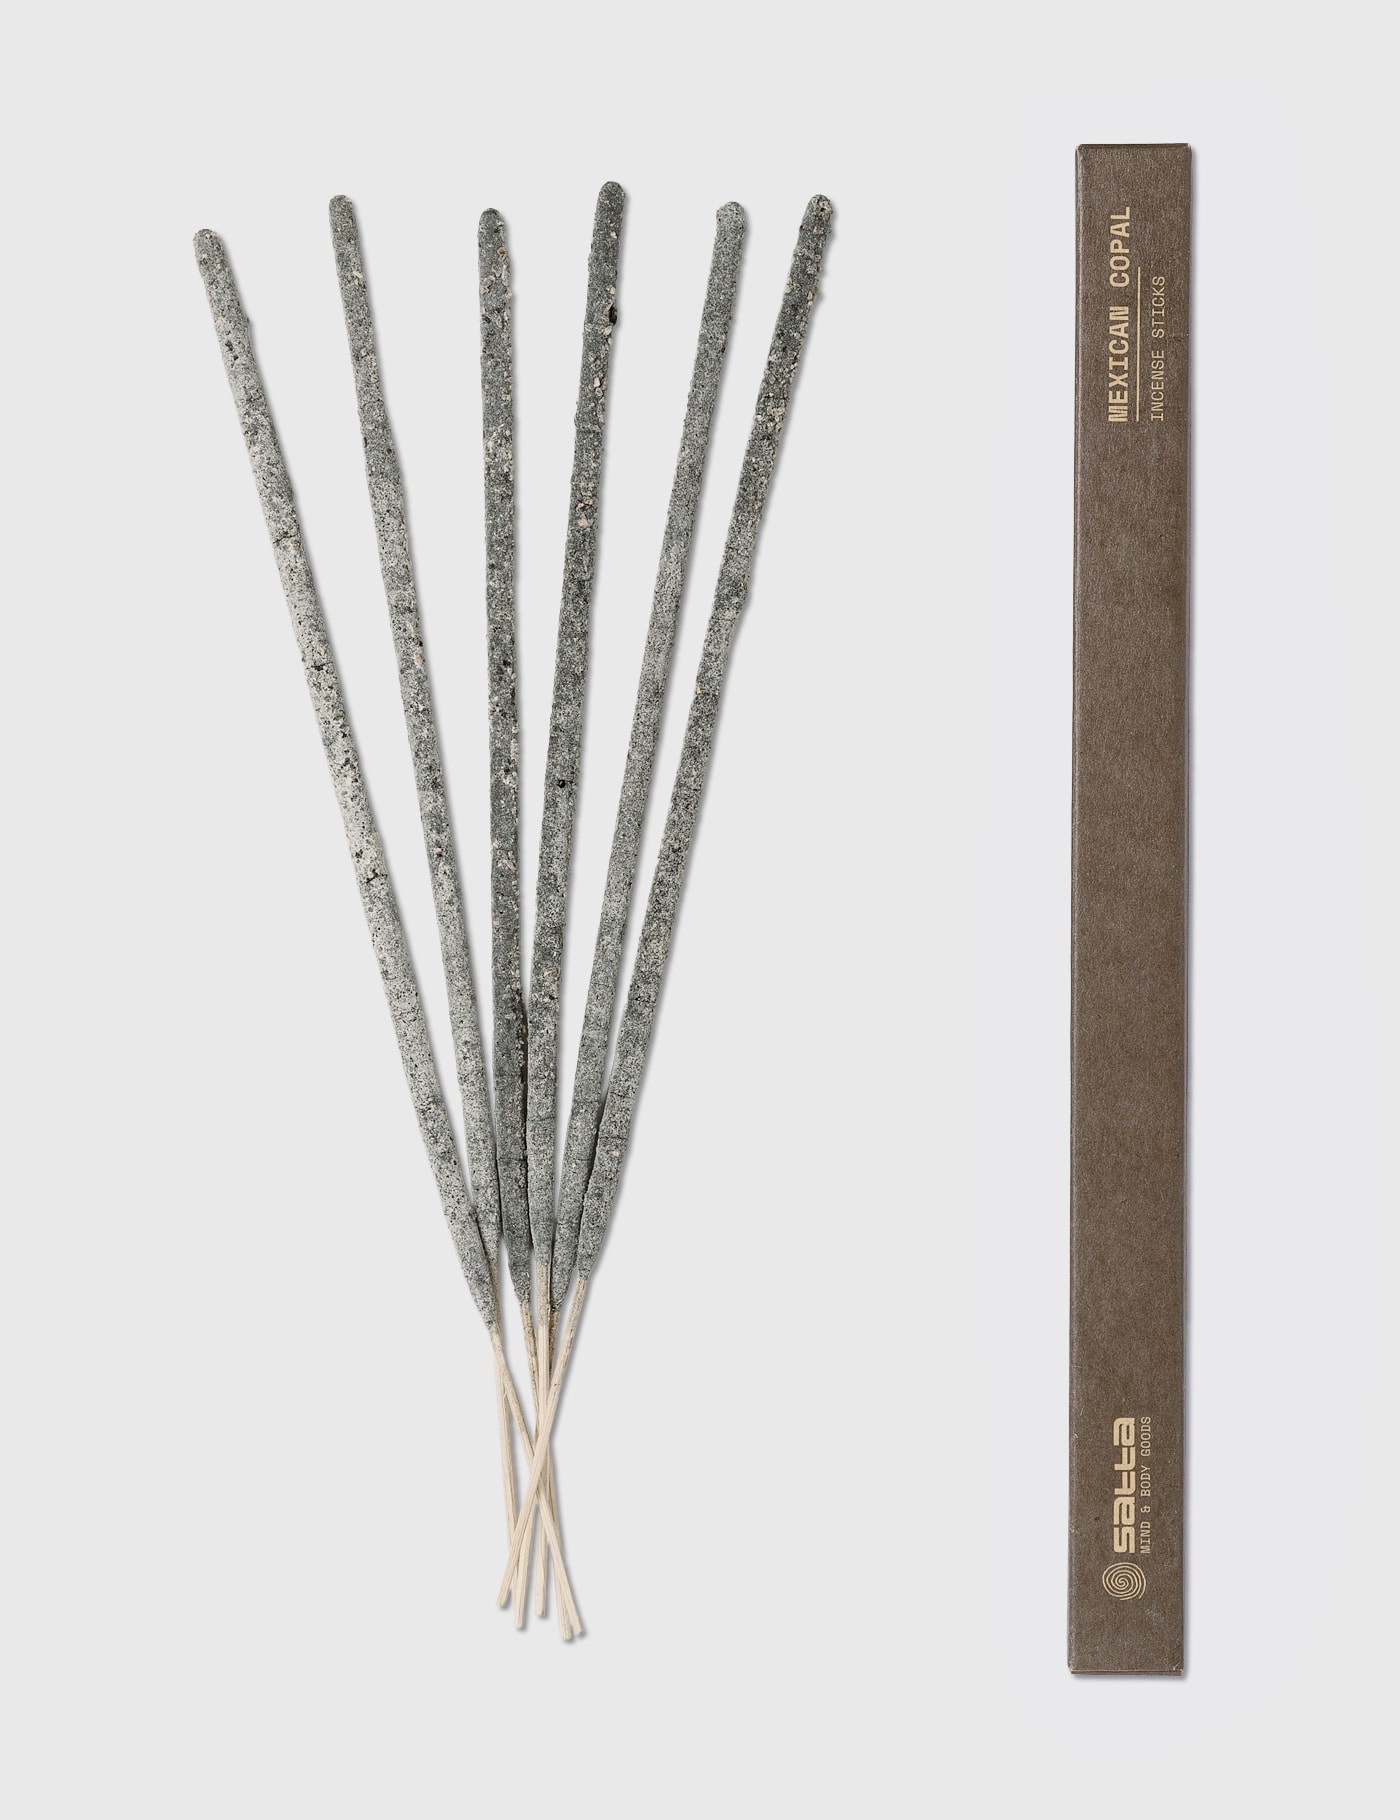 Satta Mexican Copal Incense - 6 Sticks In N,a